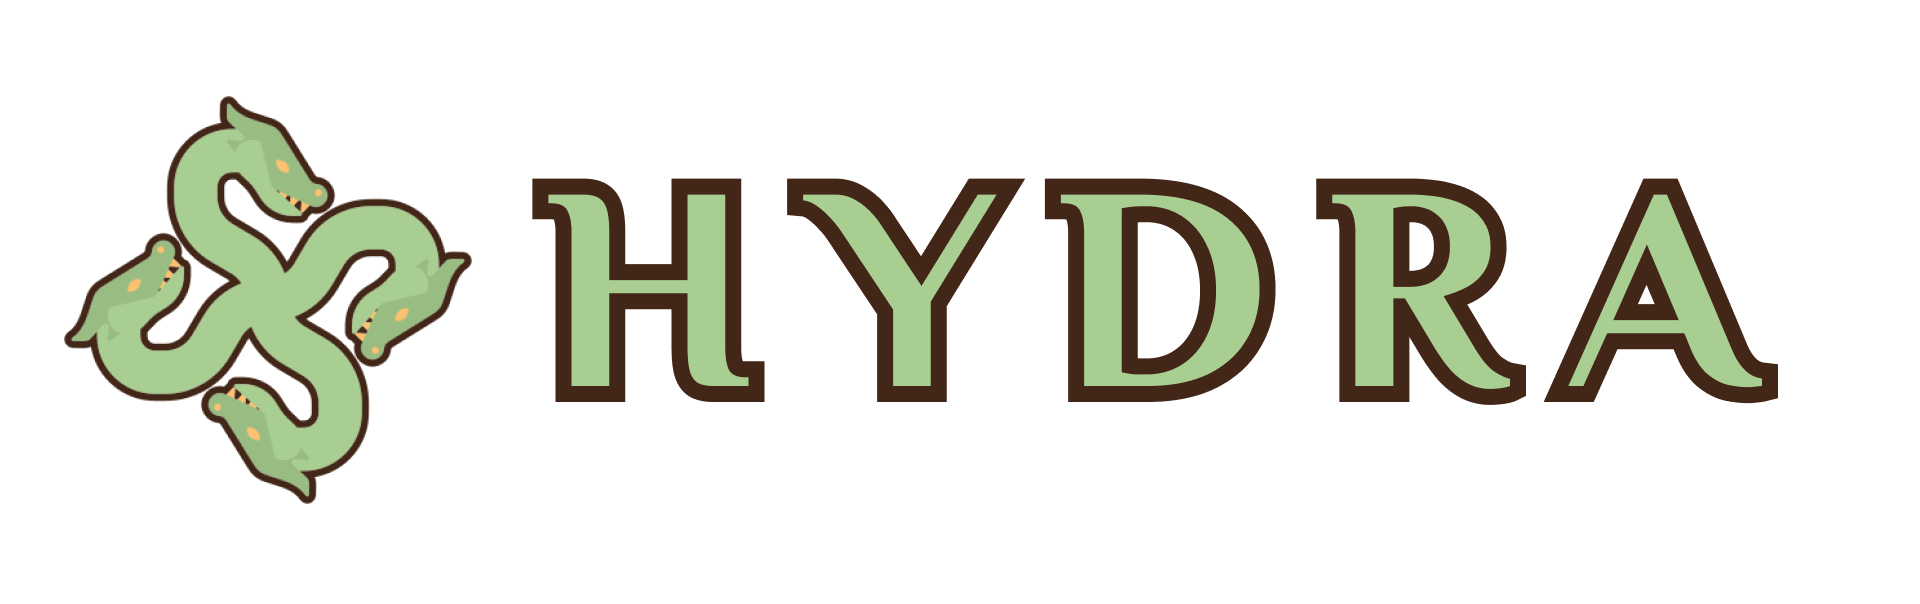 Hydra - Zero Config API Boilerplate with Laravel Sanctum